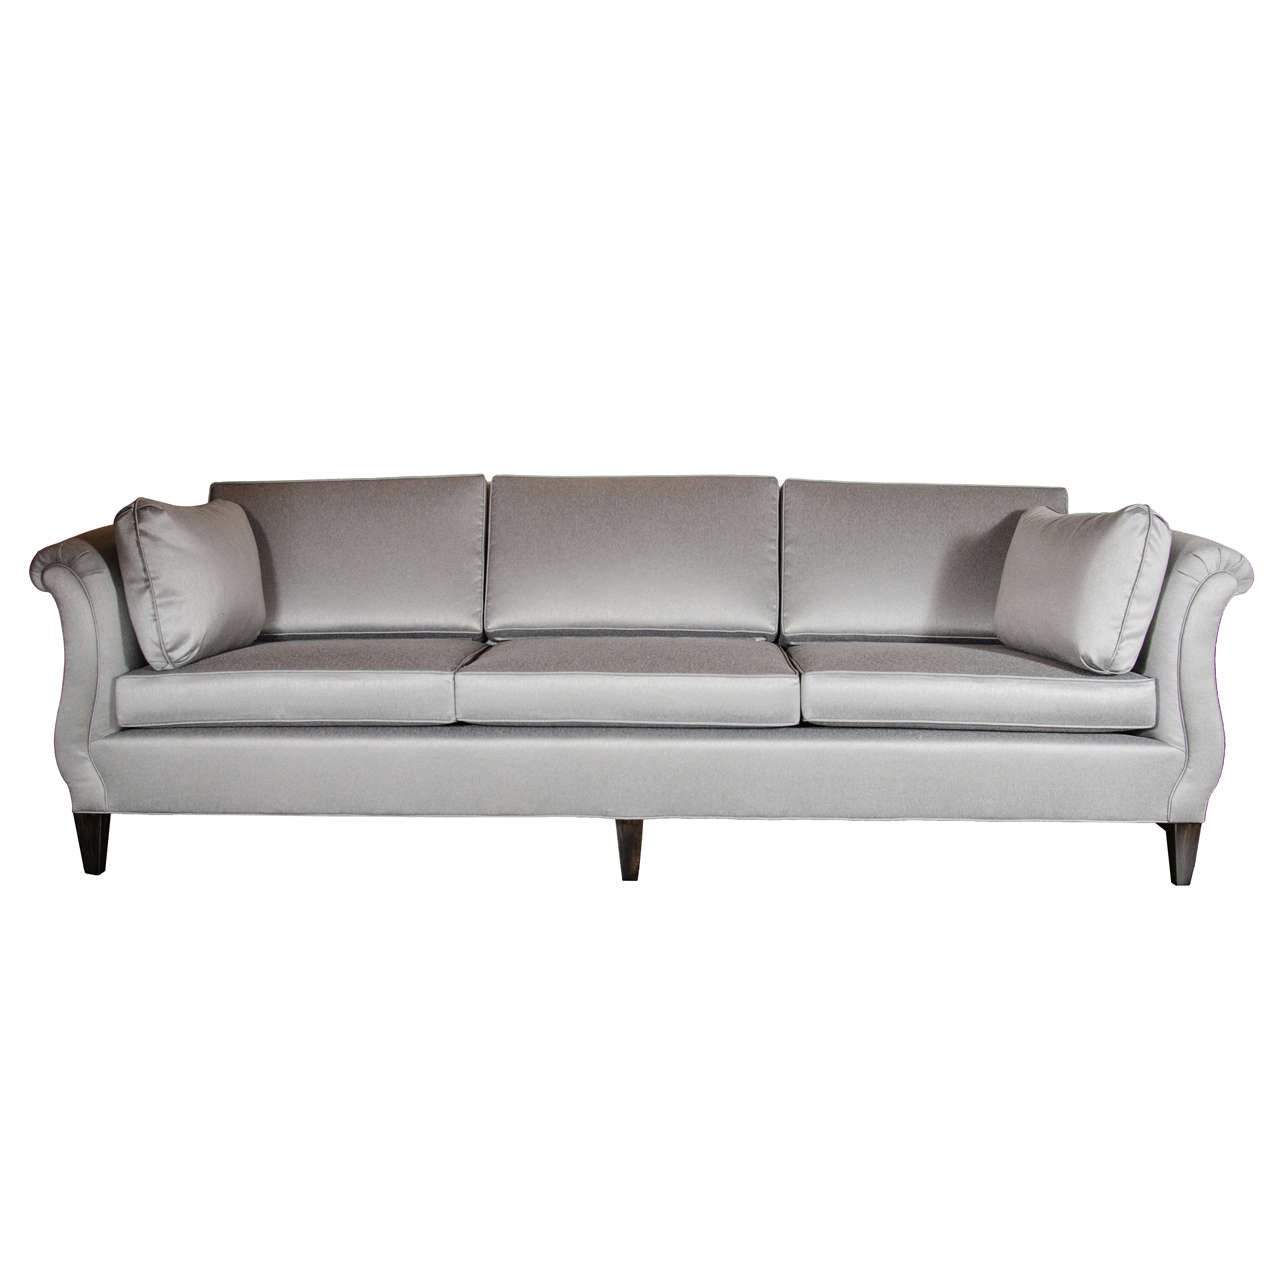 Elegant 1940s Hollywood Sofa with Scroll Arm Design